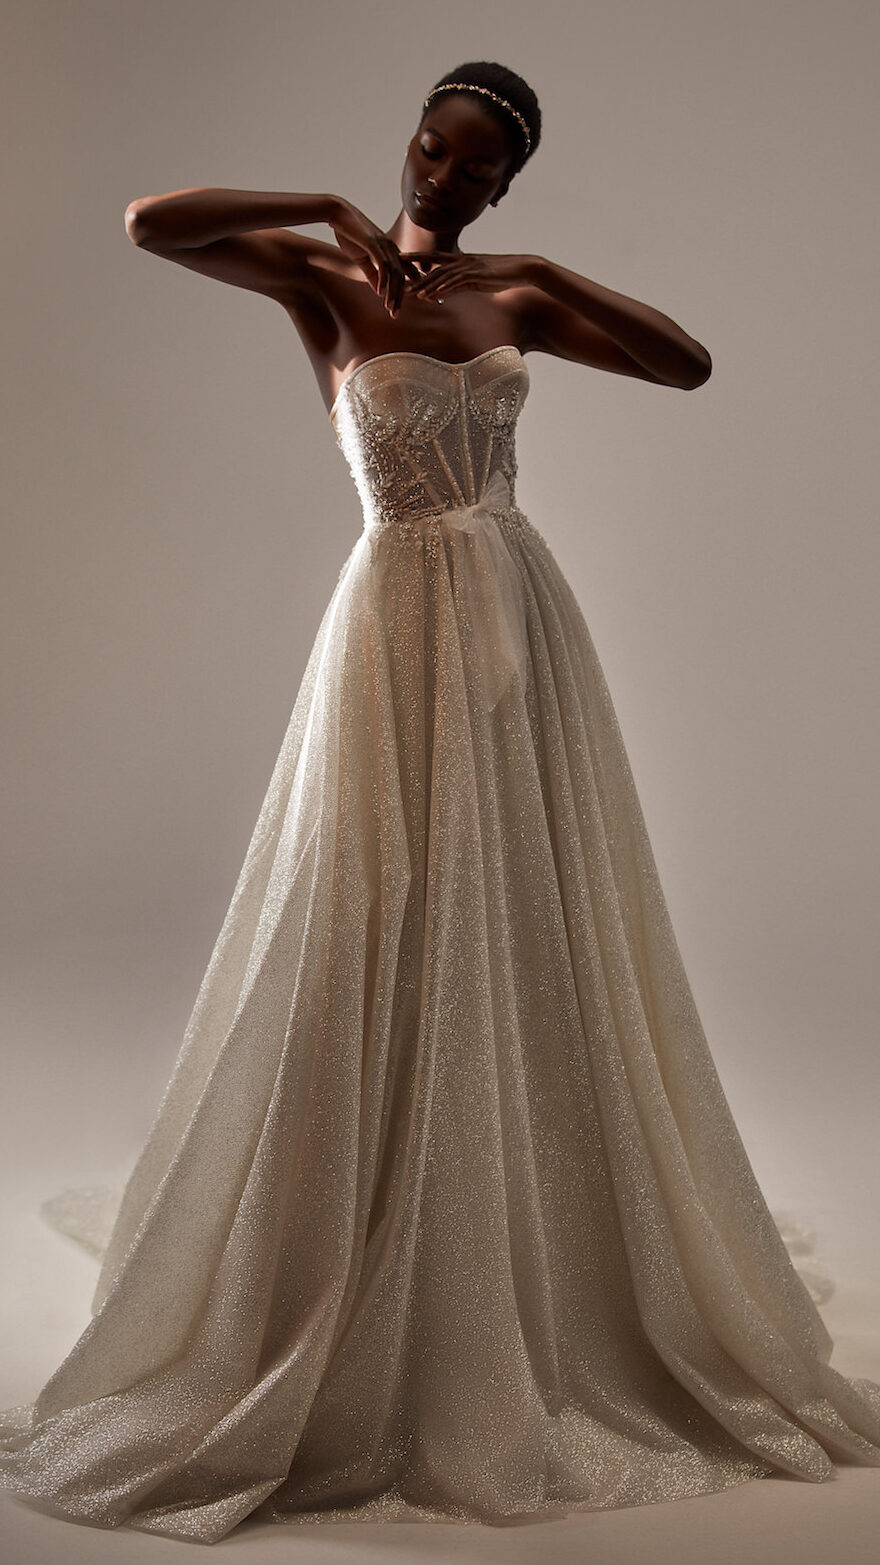 Princess Wedding Dress by Milla Nova - Wikolette white lace